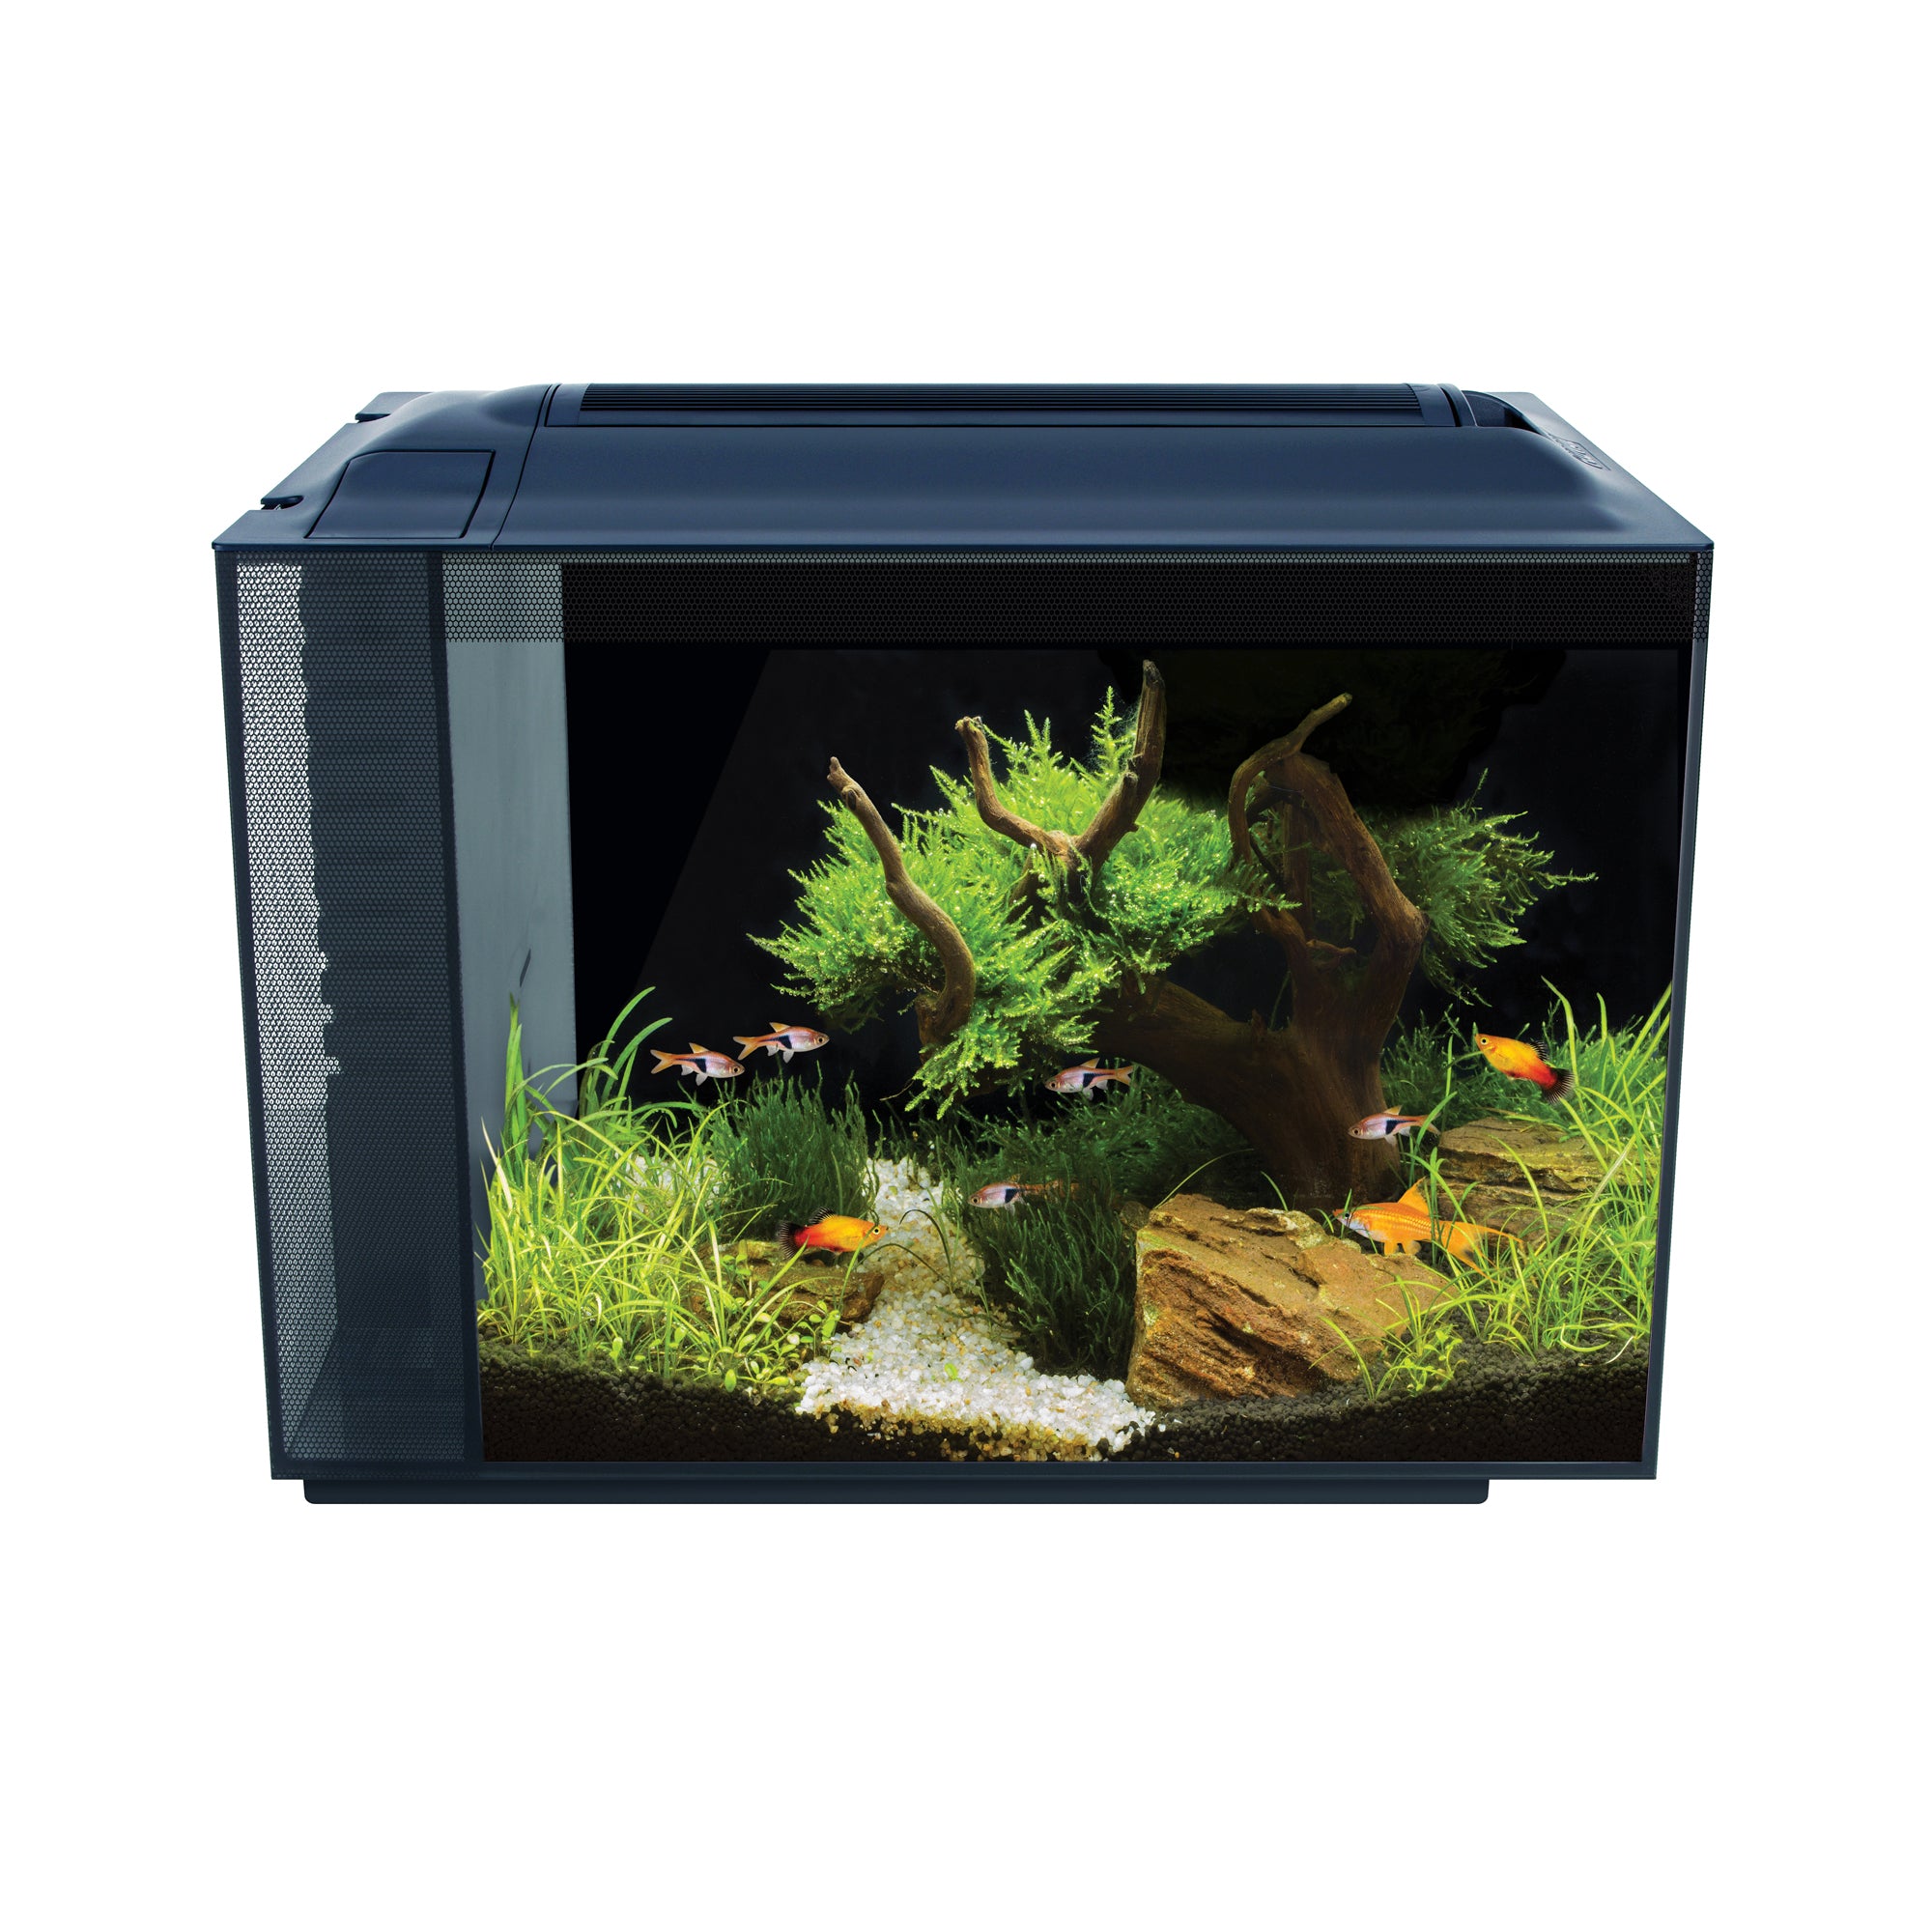 Fluval 16 Gallon Aquarium Tank with Live Freshwater Aquatic lant | Nano Fish | Nano Fish Tank | Nano Aquarium Tank